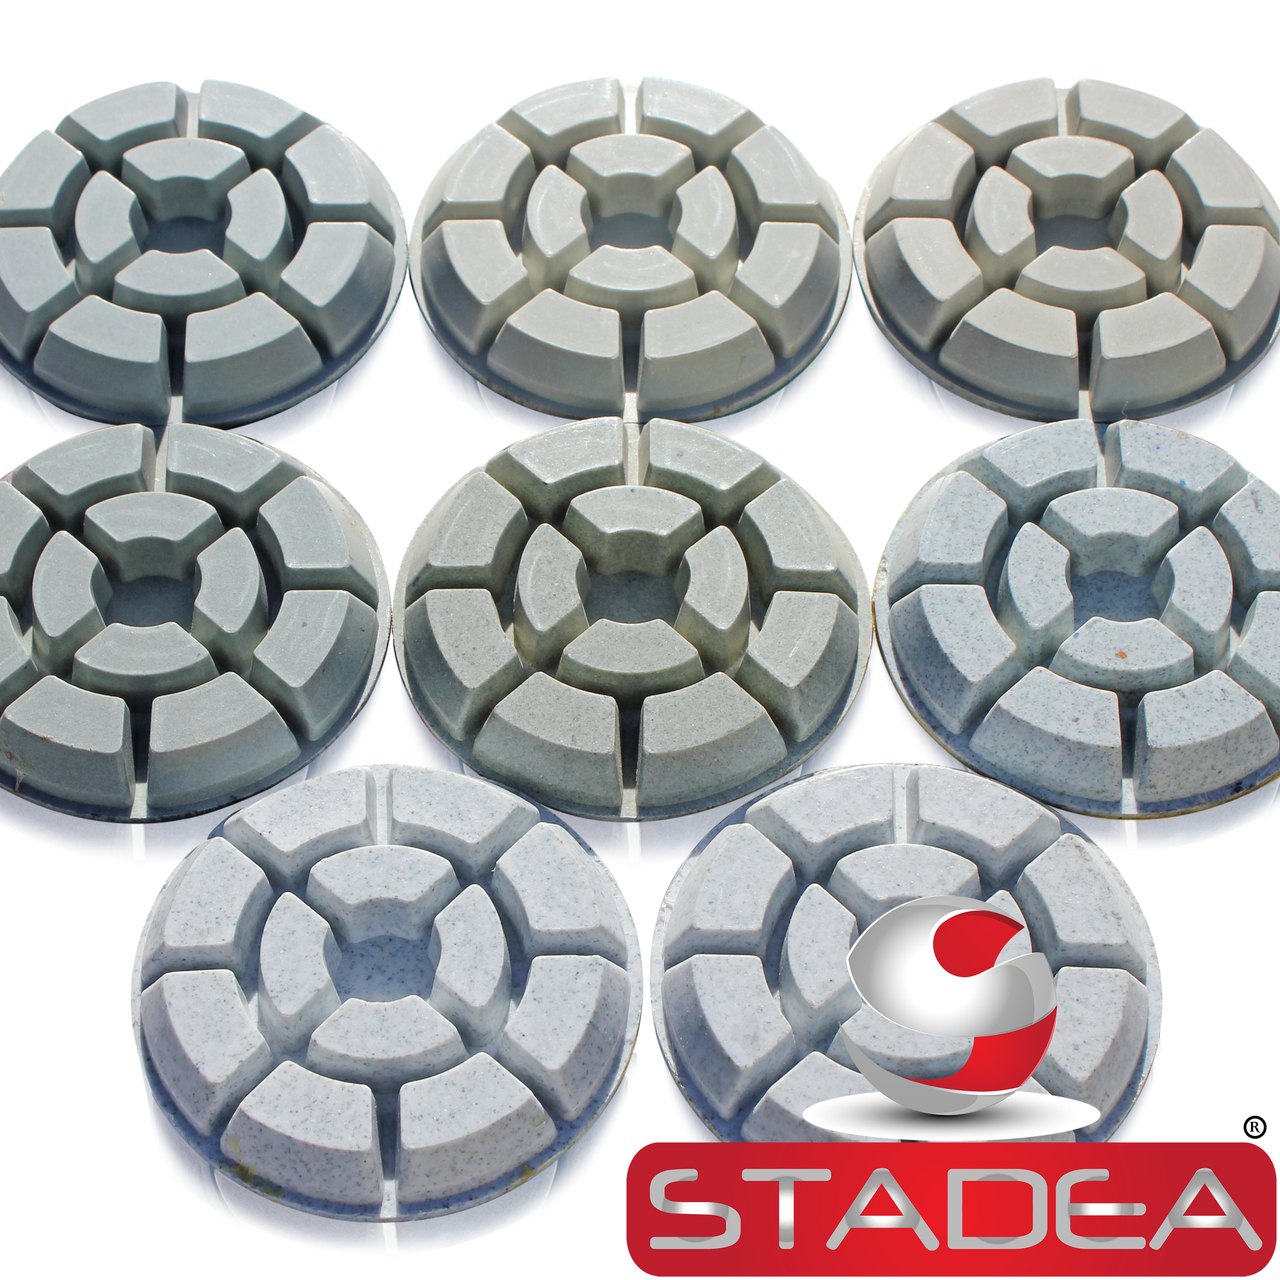 diamond floor polishing pad for concrete Grit 800 By Stadea